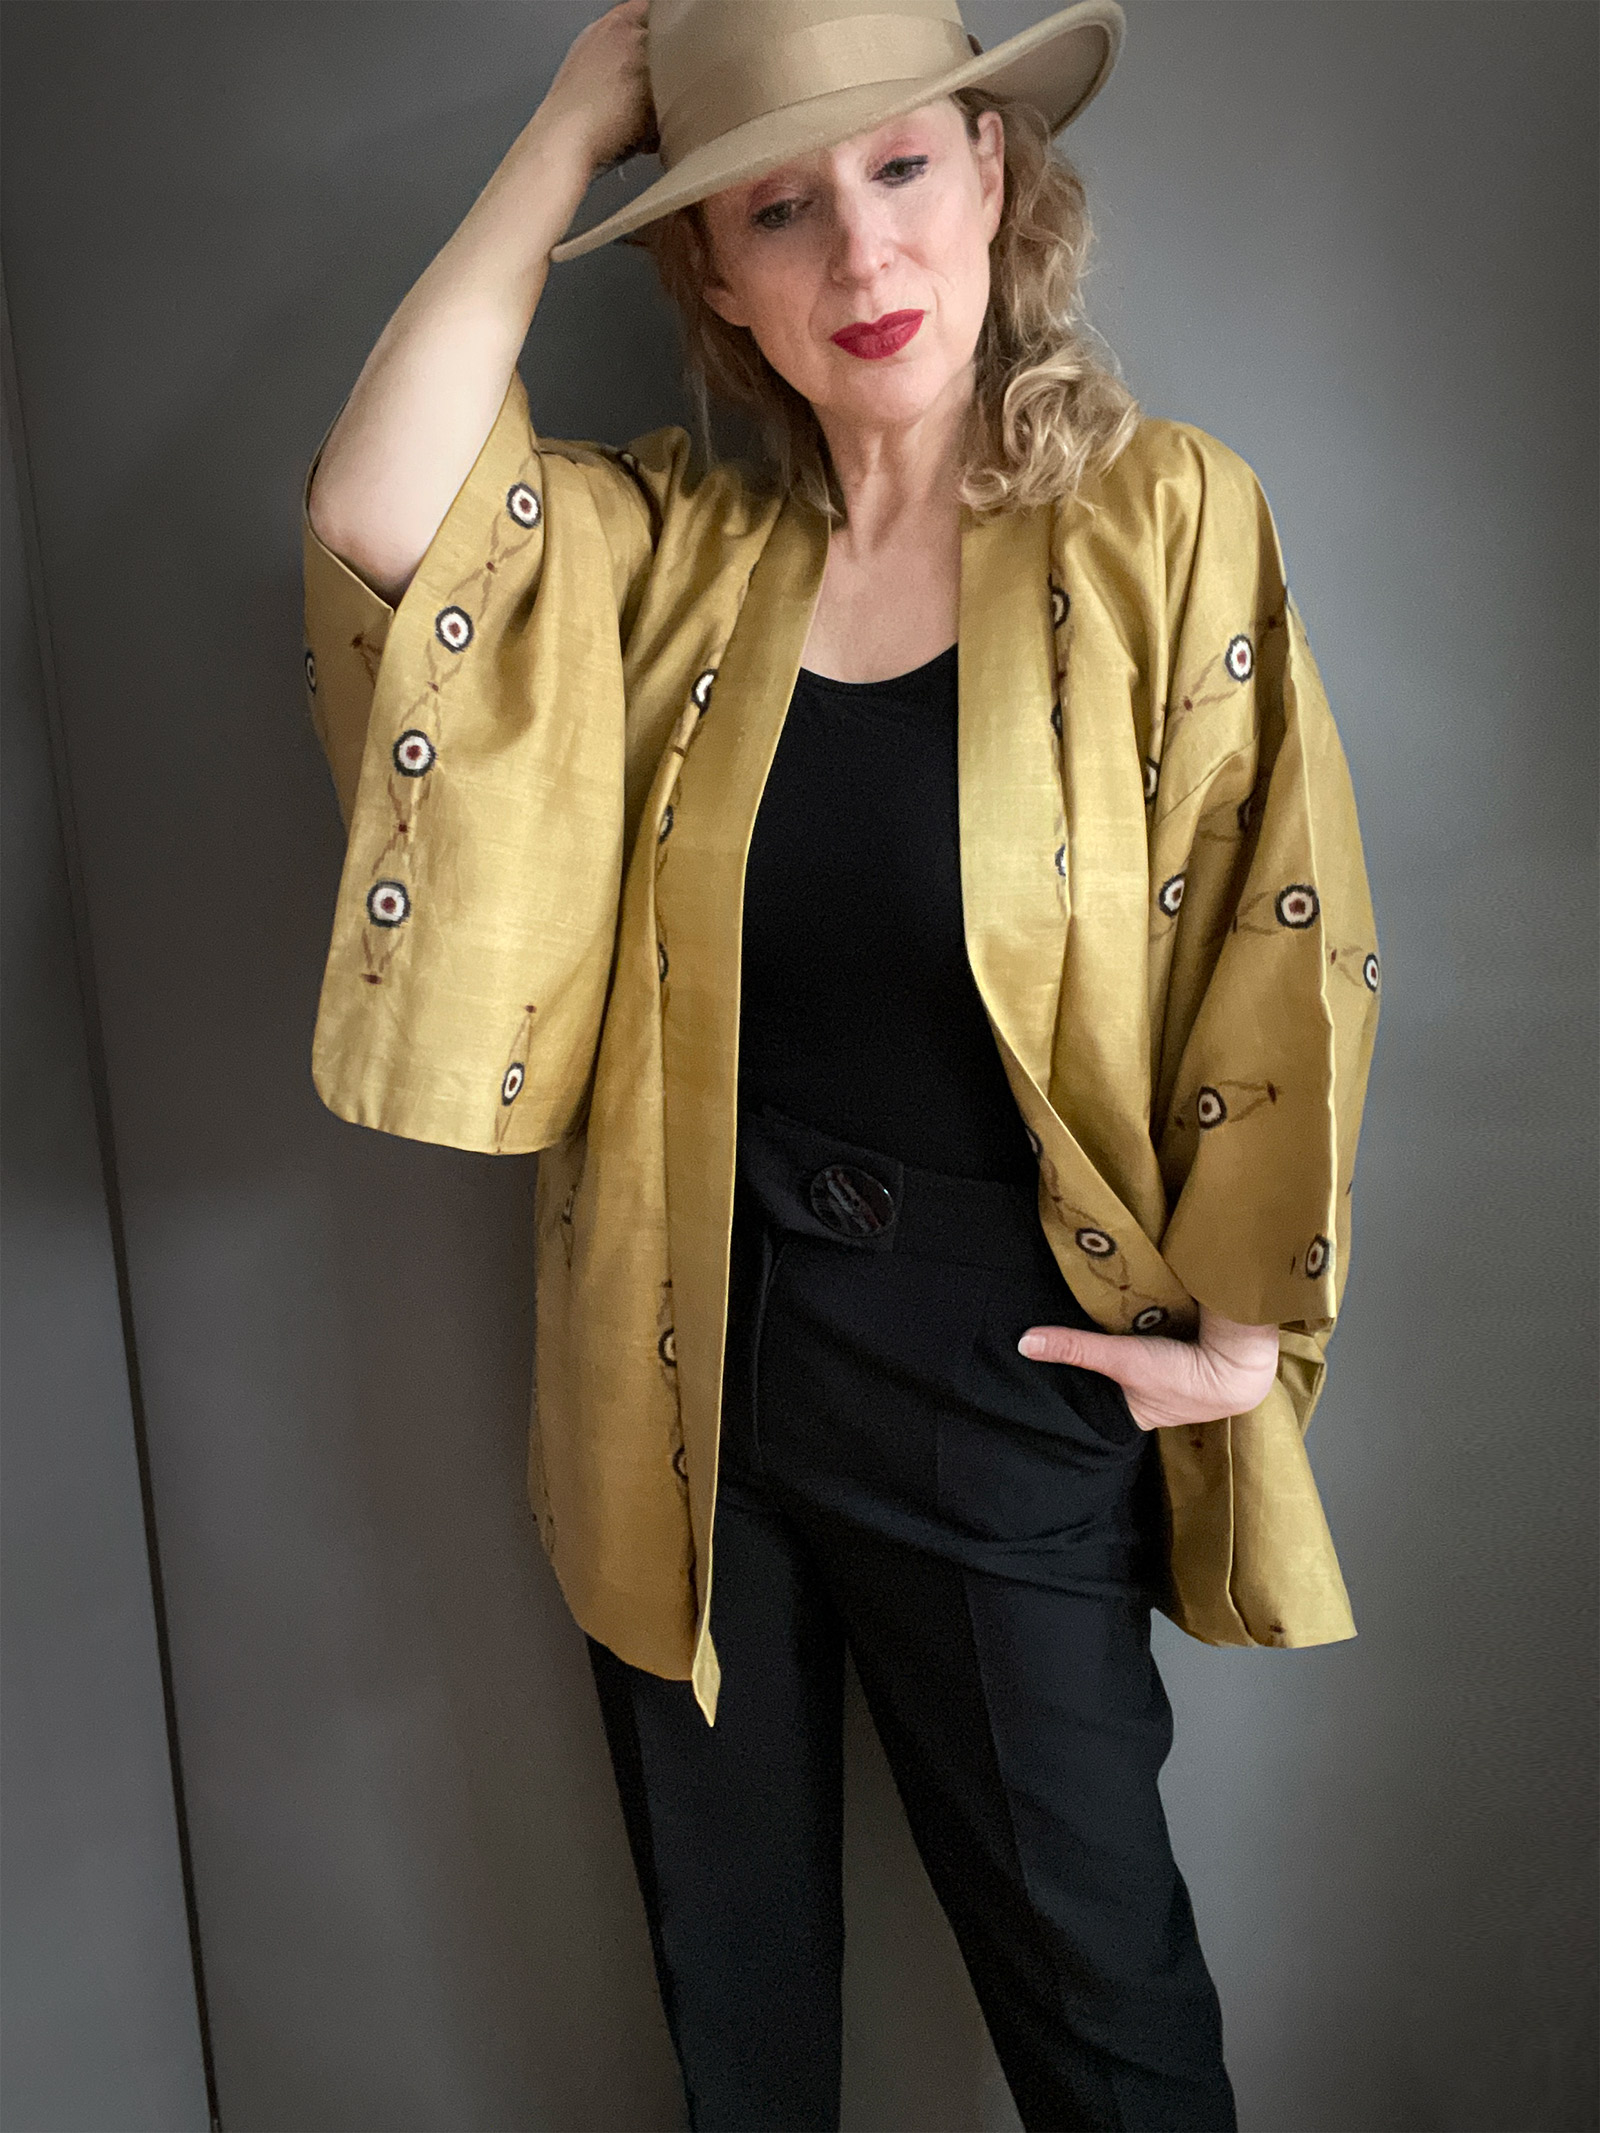 Kin – Stylish Haori handmade of ocher-gold Meisen silk